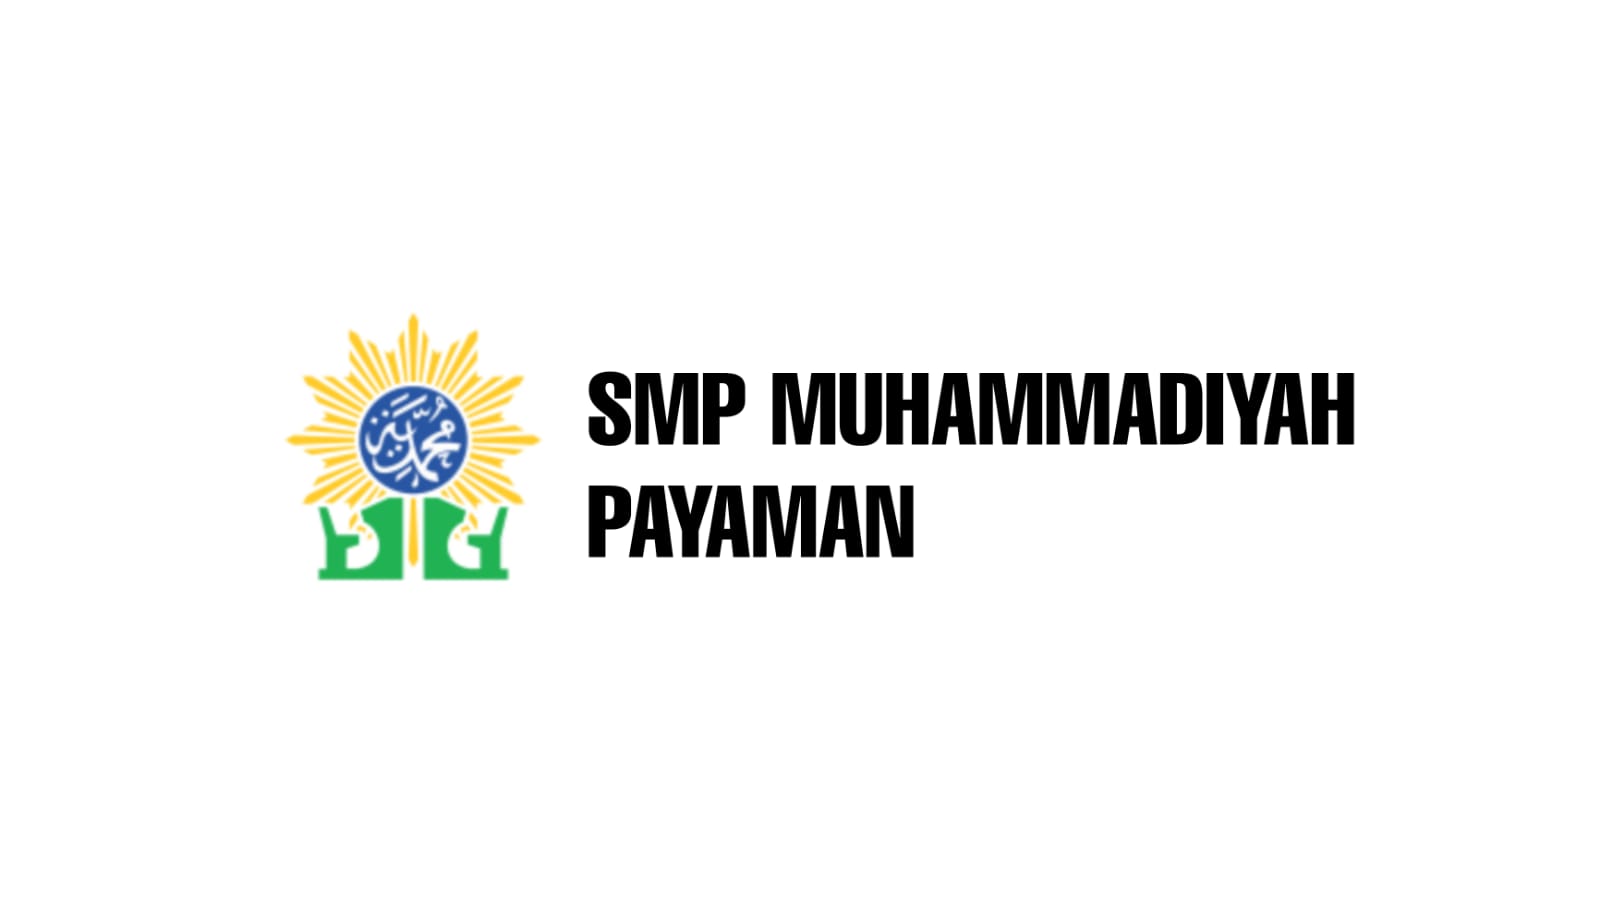 SMP Muhammadiyah Payaman